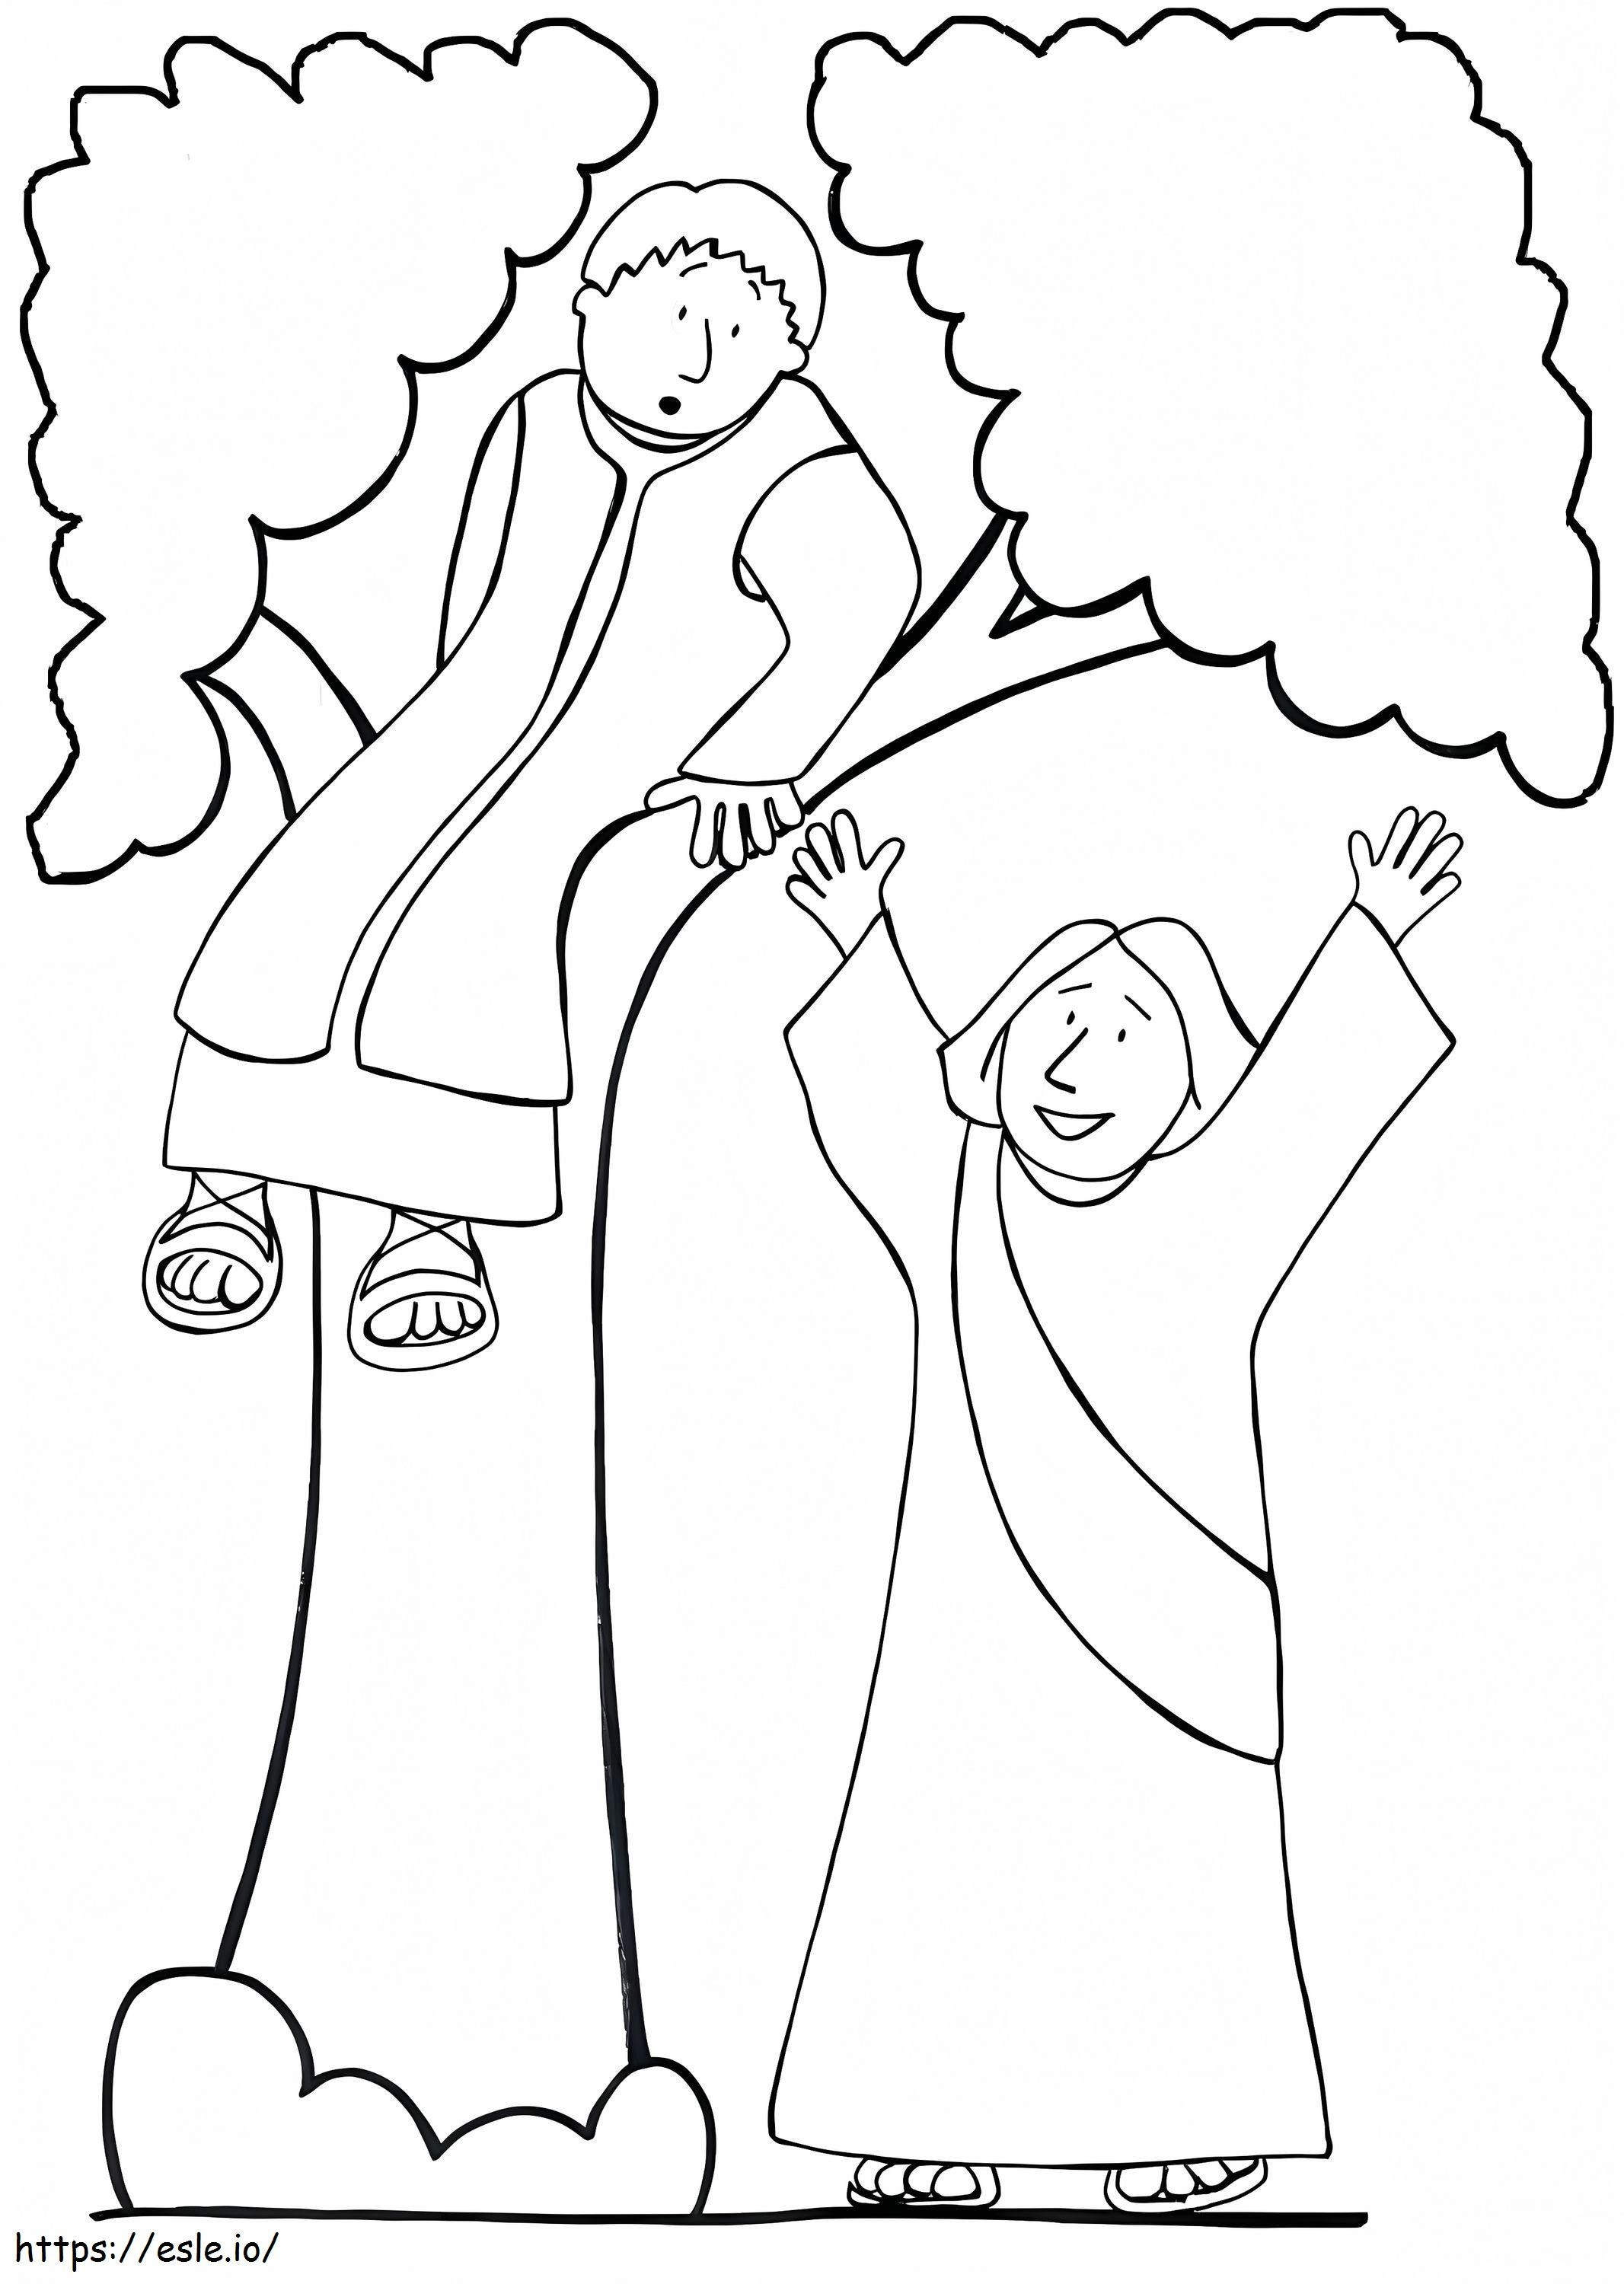 Zacchaeus On Tree Cartoon coloring page